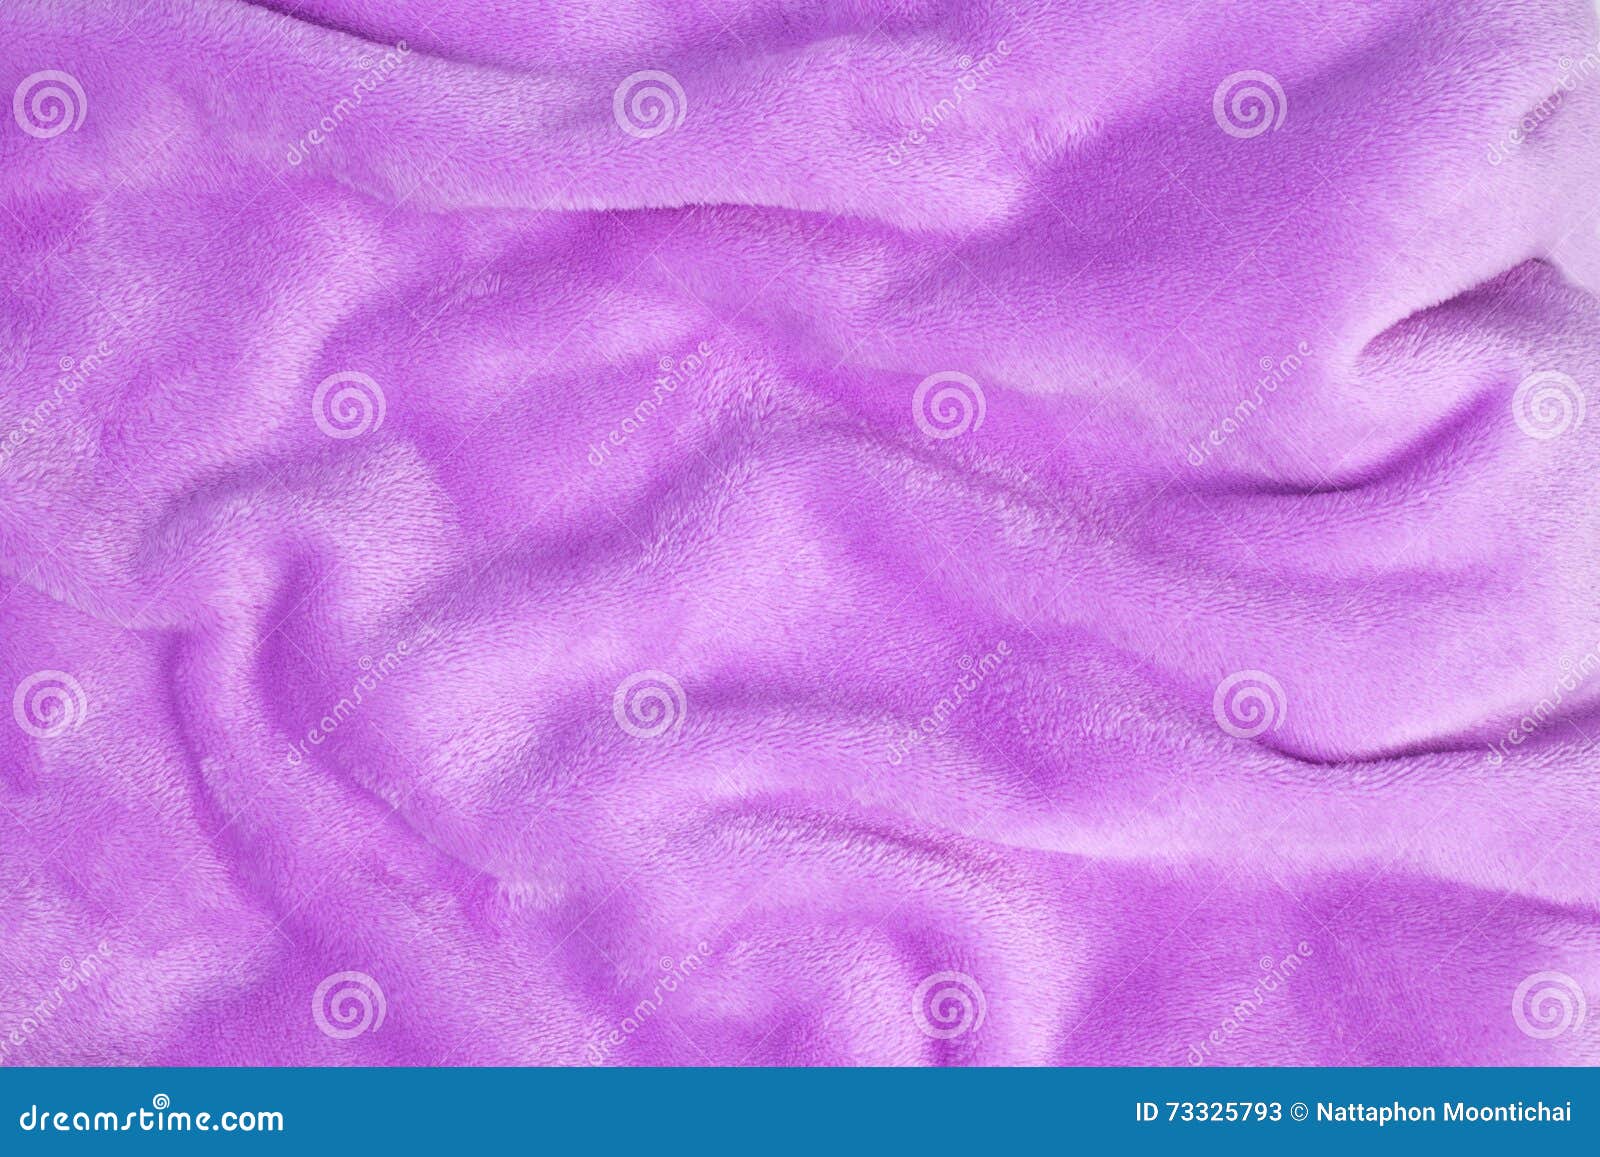 https://thumbs.dreamstime.com/z/blanket-texture-soft-purple-violet-velvet-background-fold-shine-warm-curve-fabric-73325793.jpg